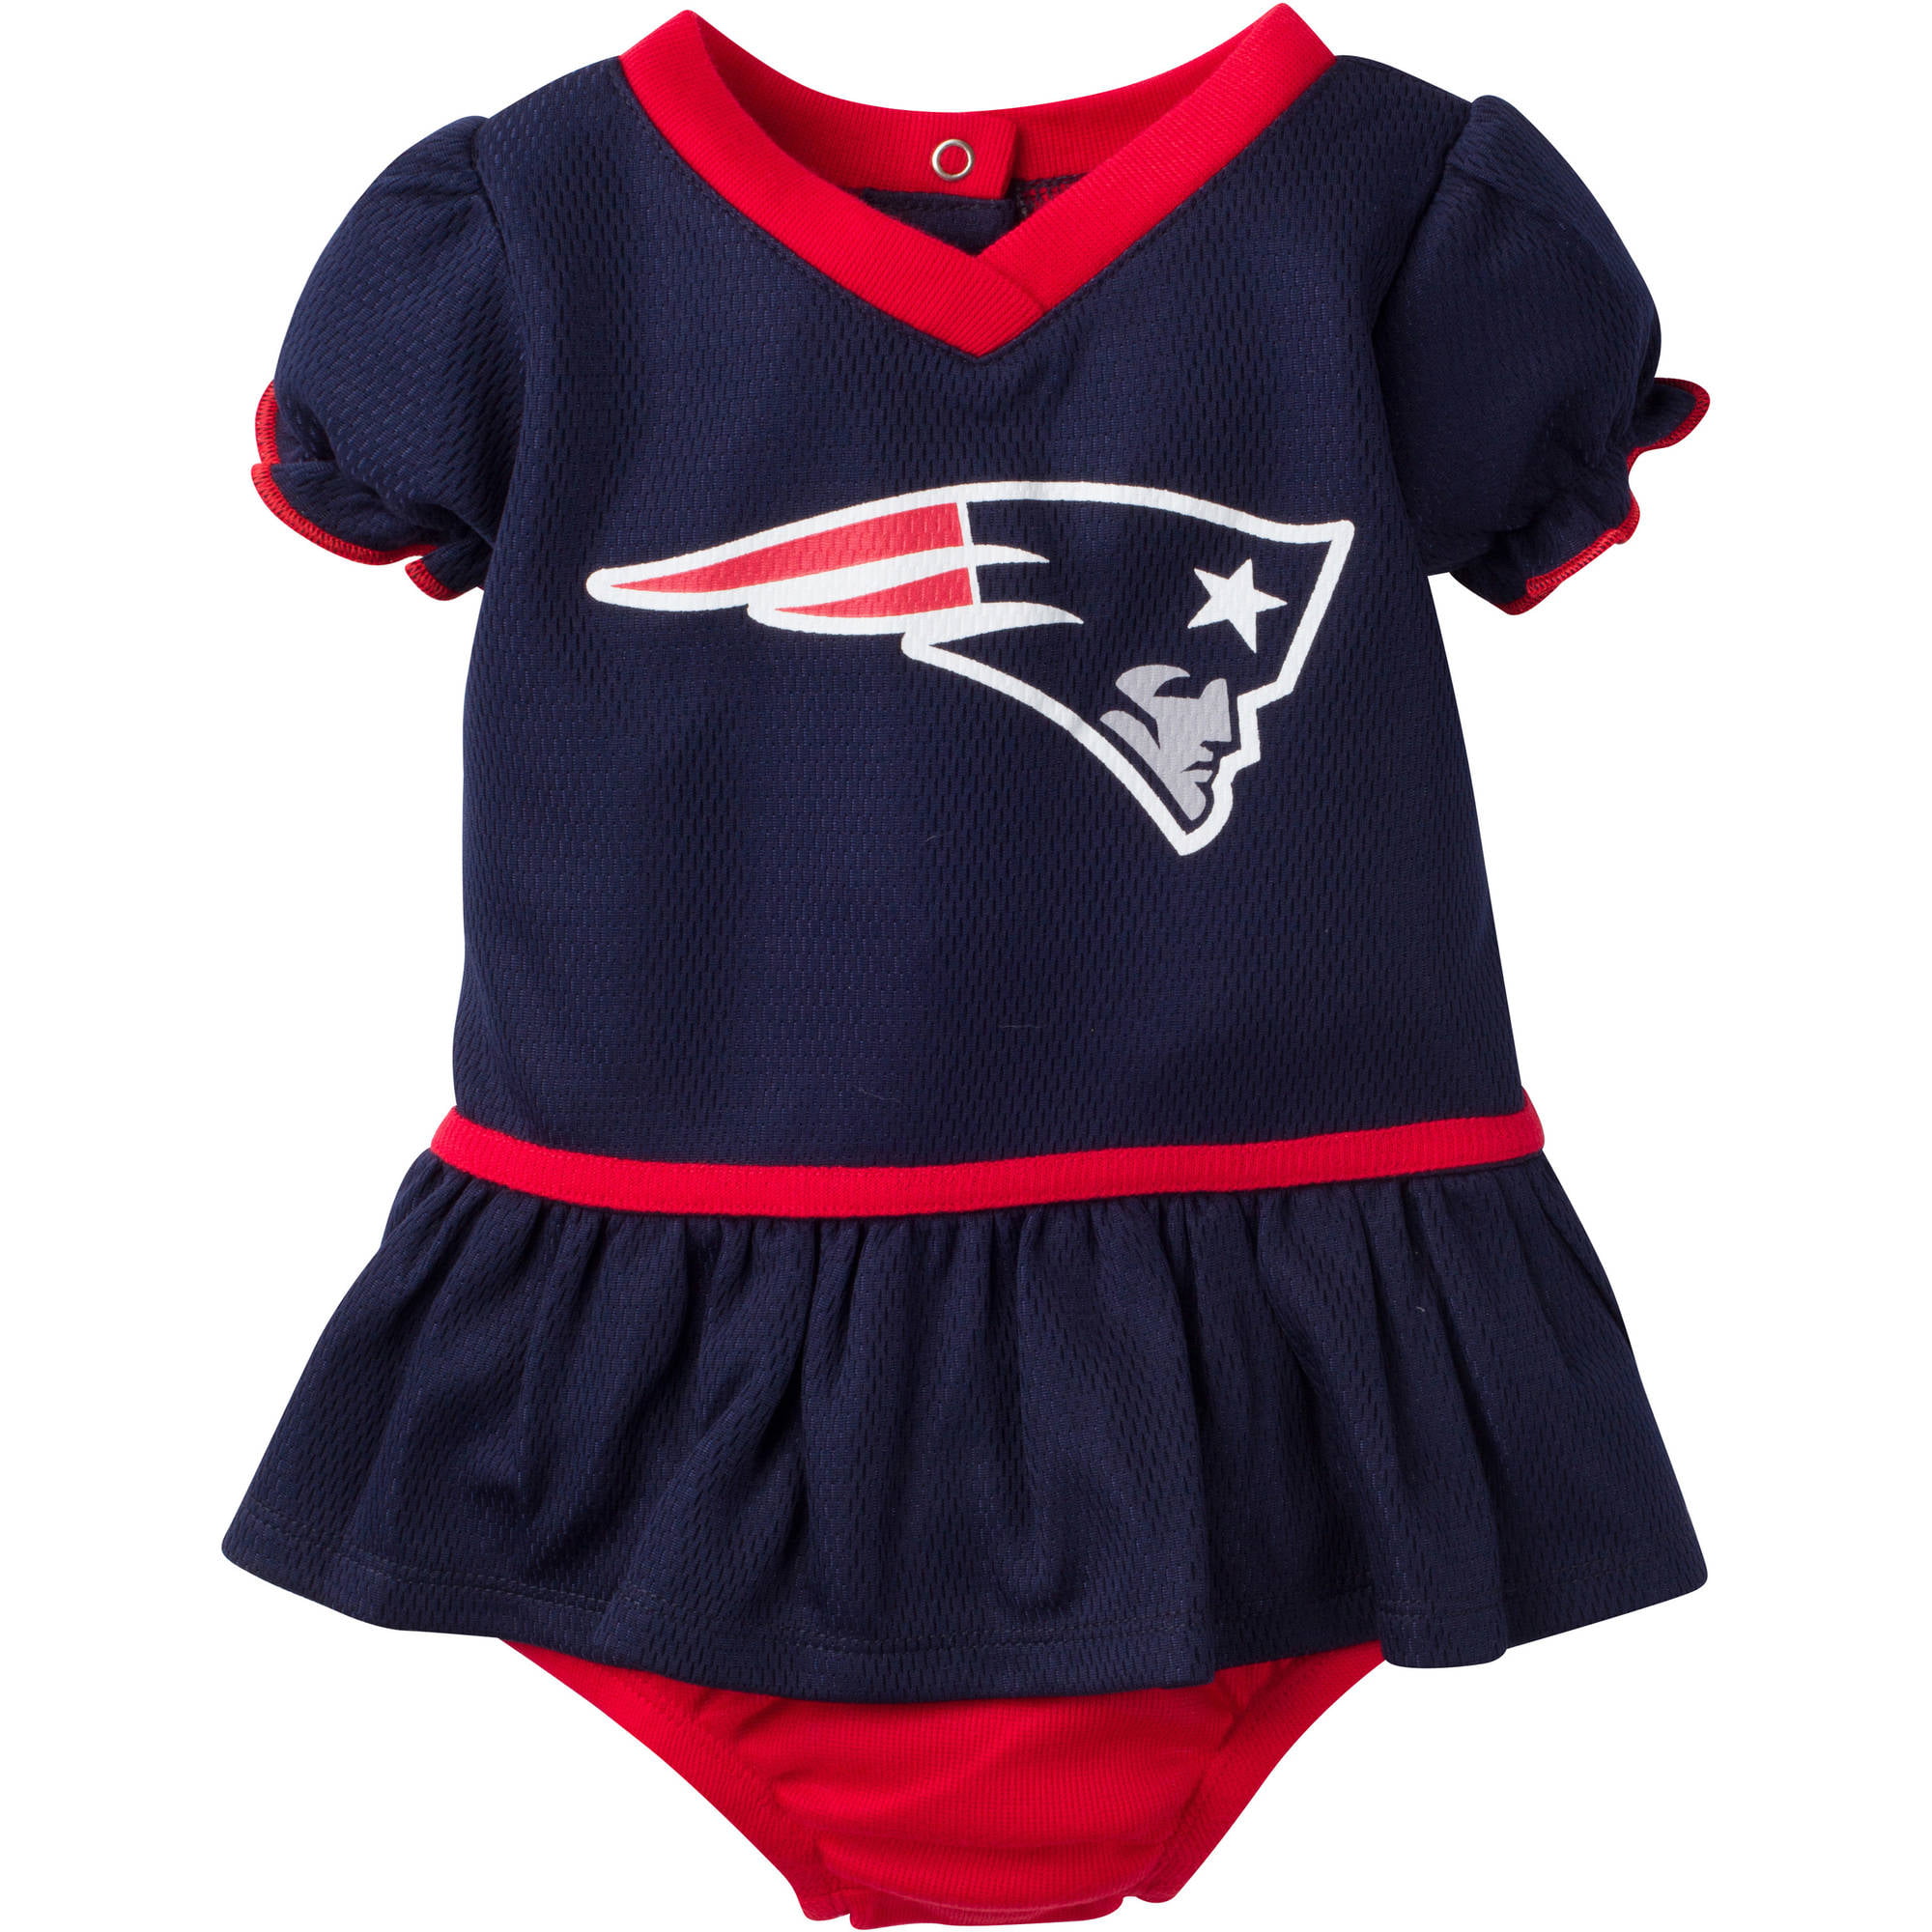 baby girl patriots jersey